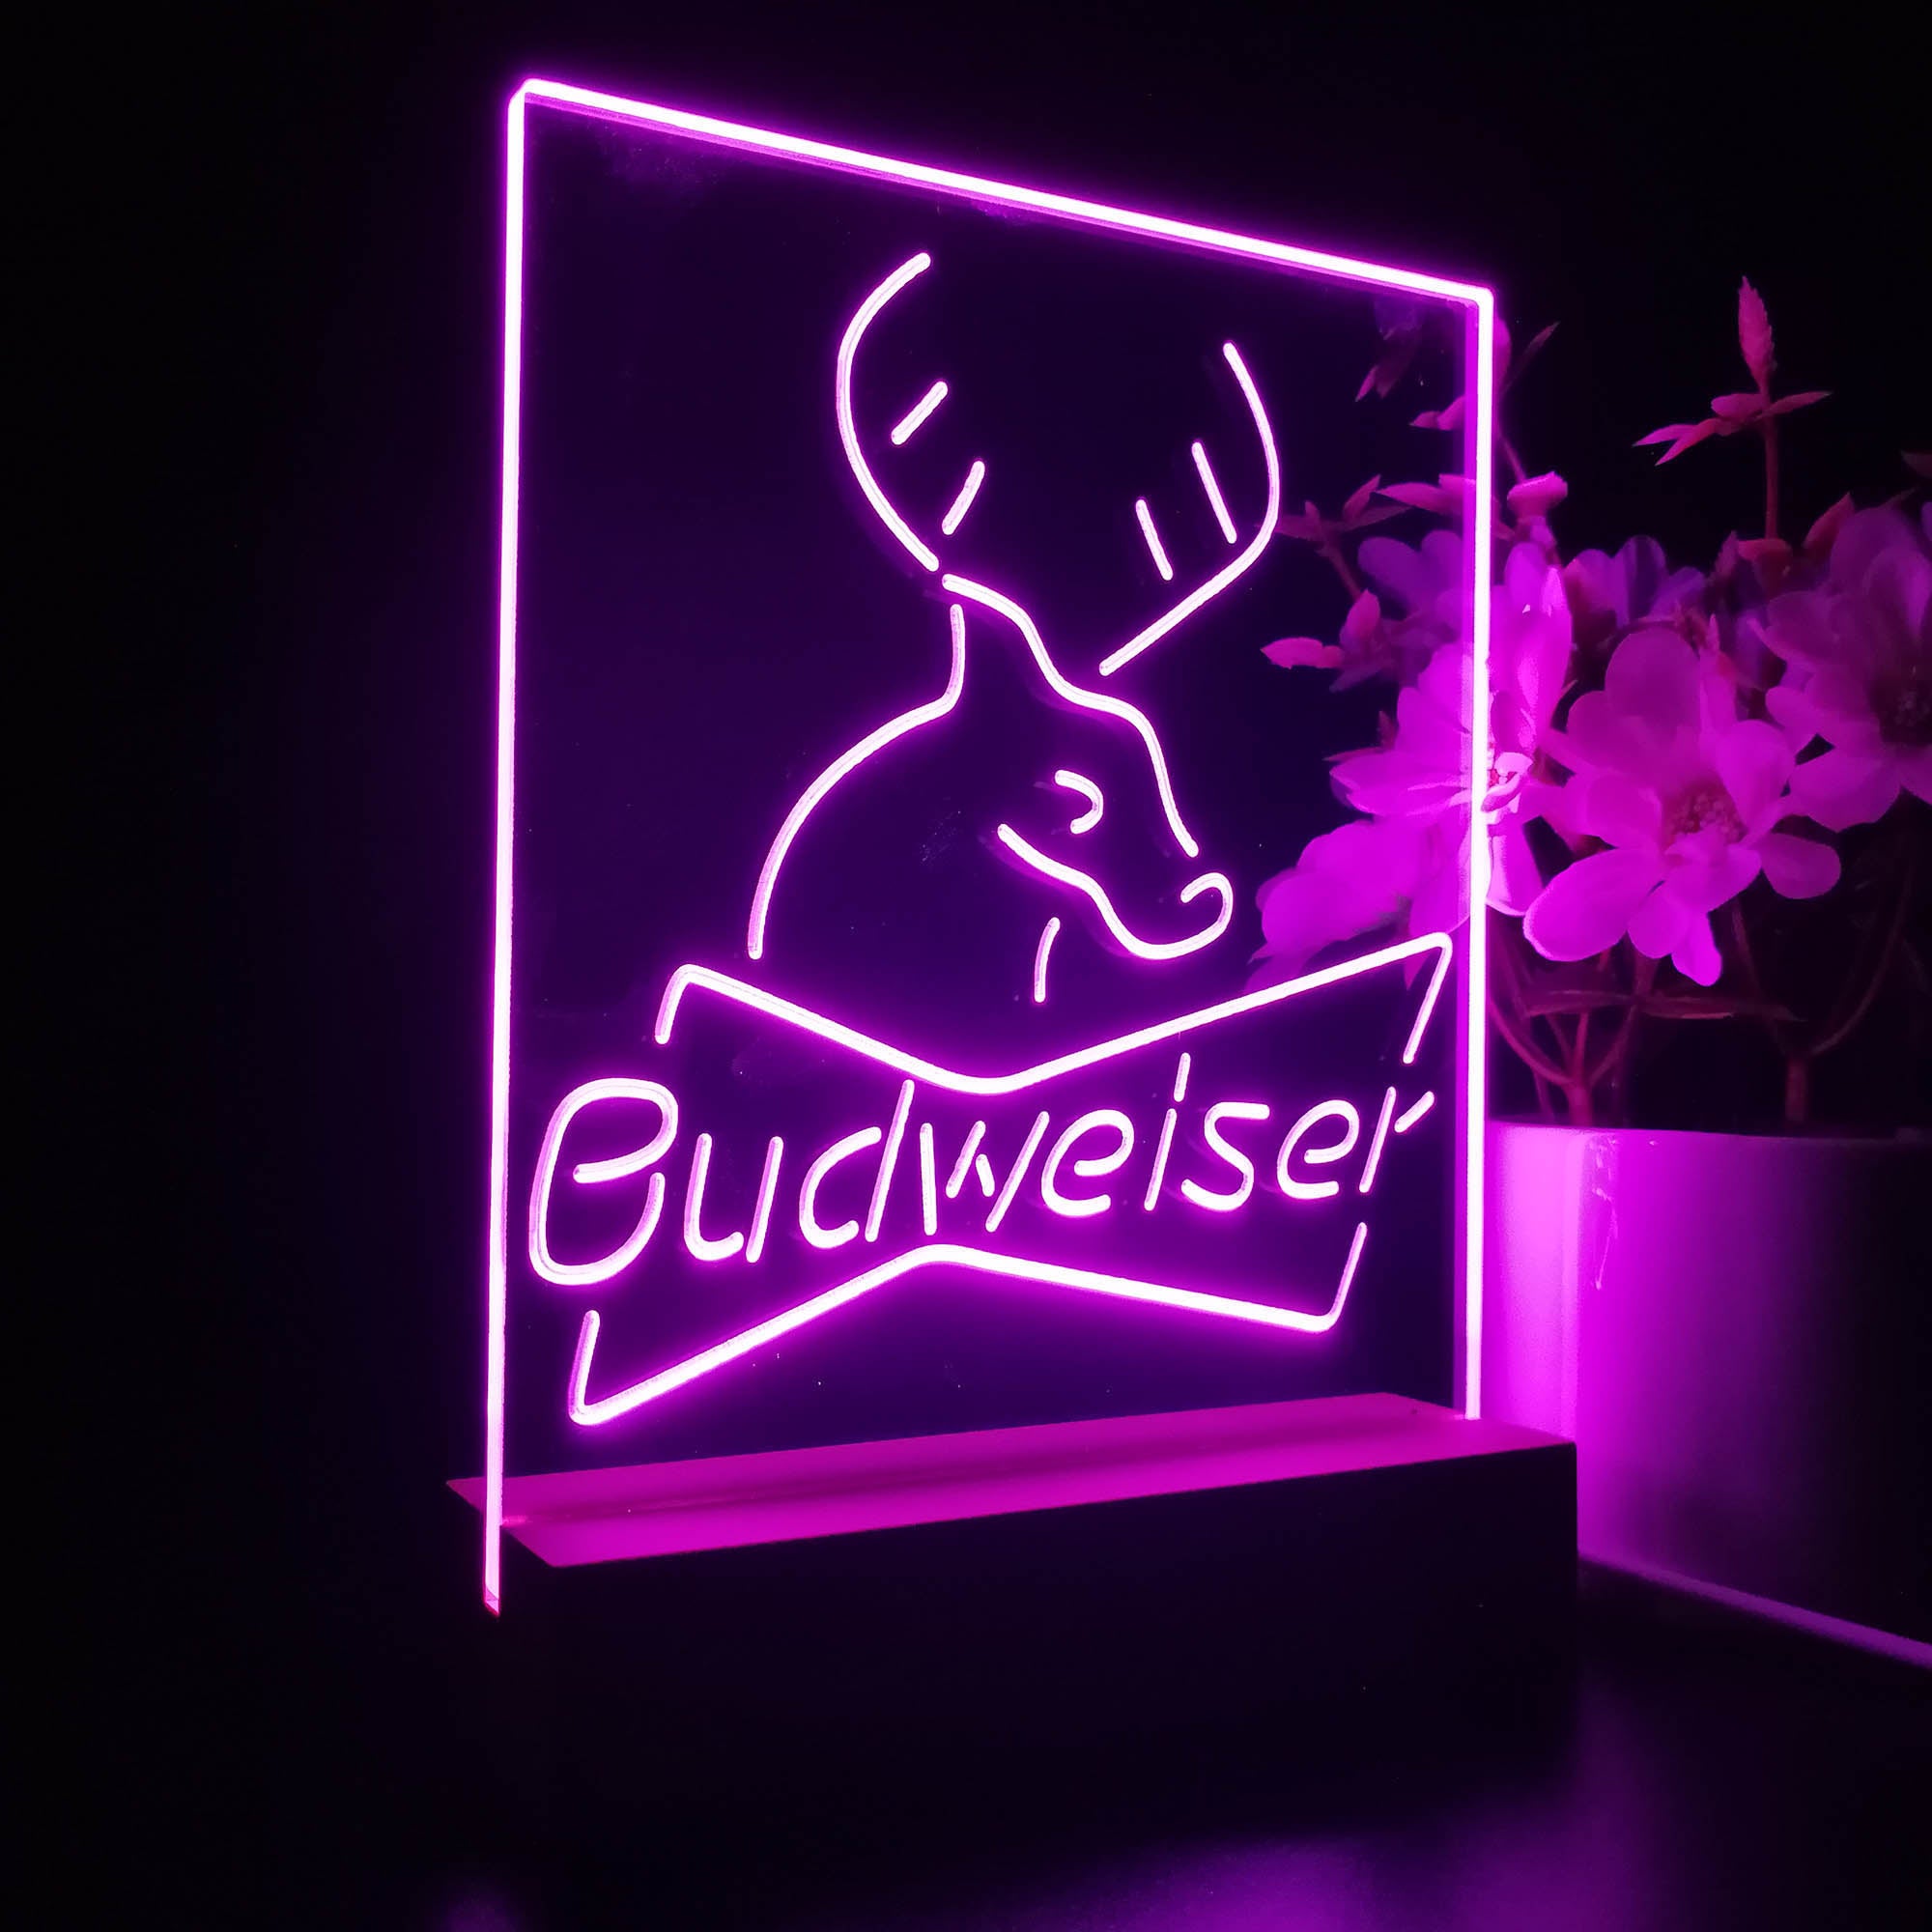 Budweiser Deer Hunting Cabin 3D LED Optical Illusion Night Light Table Lamp